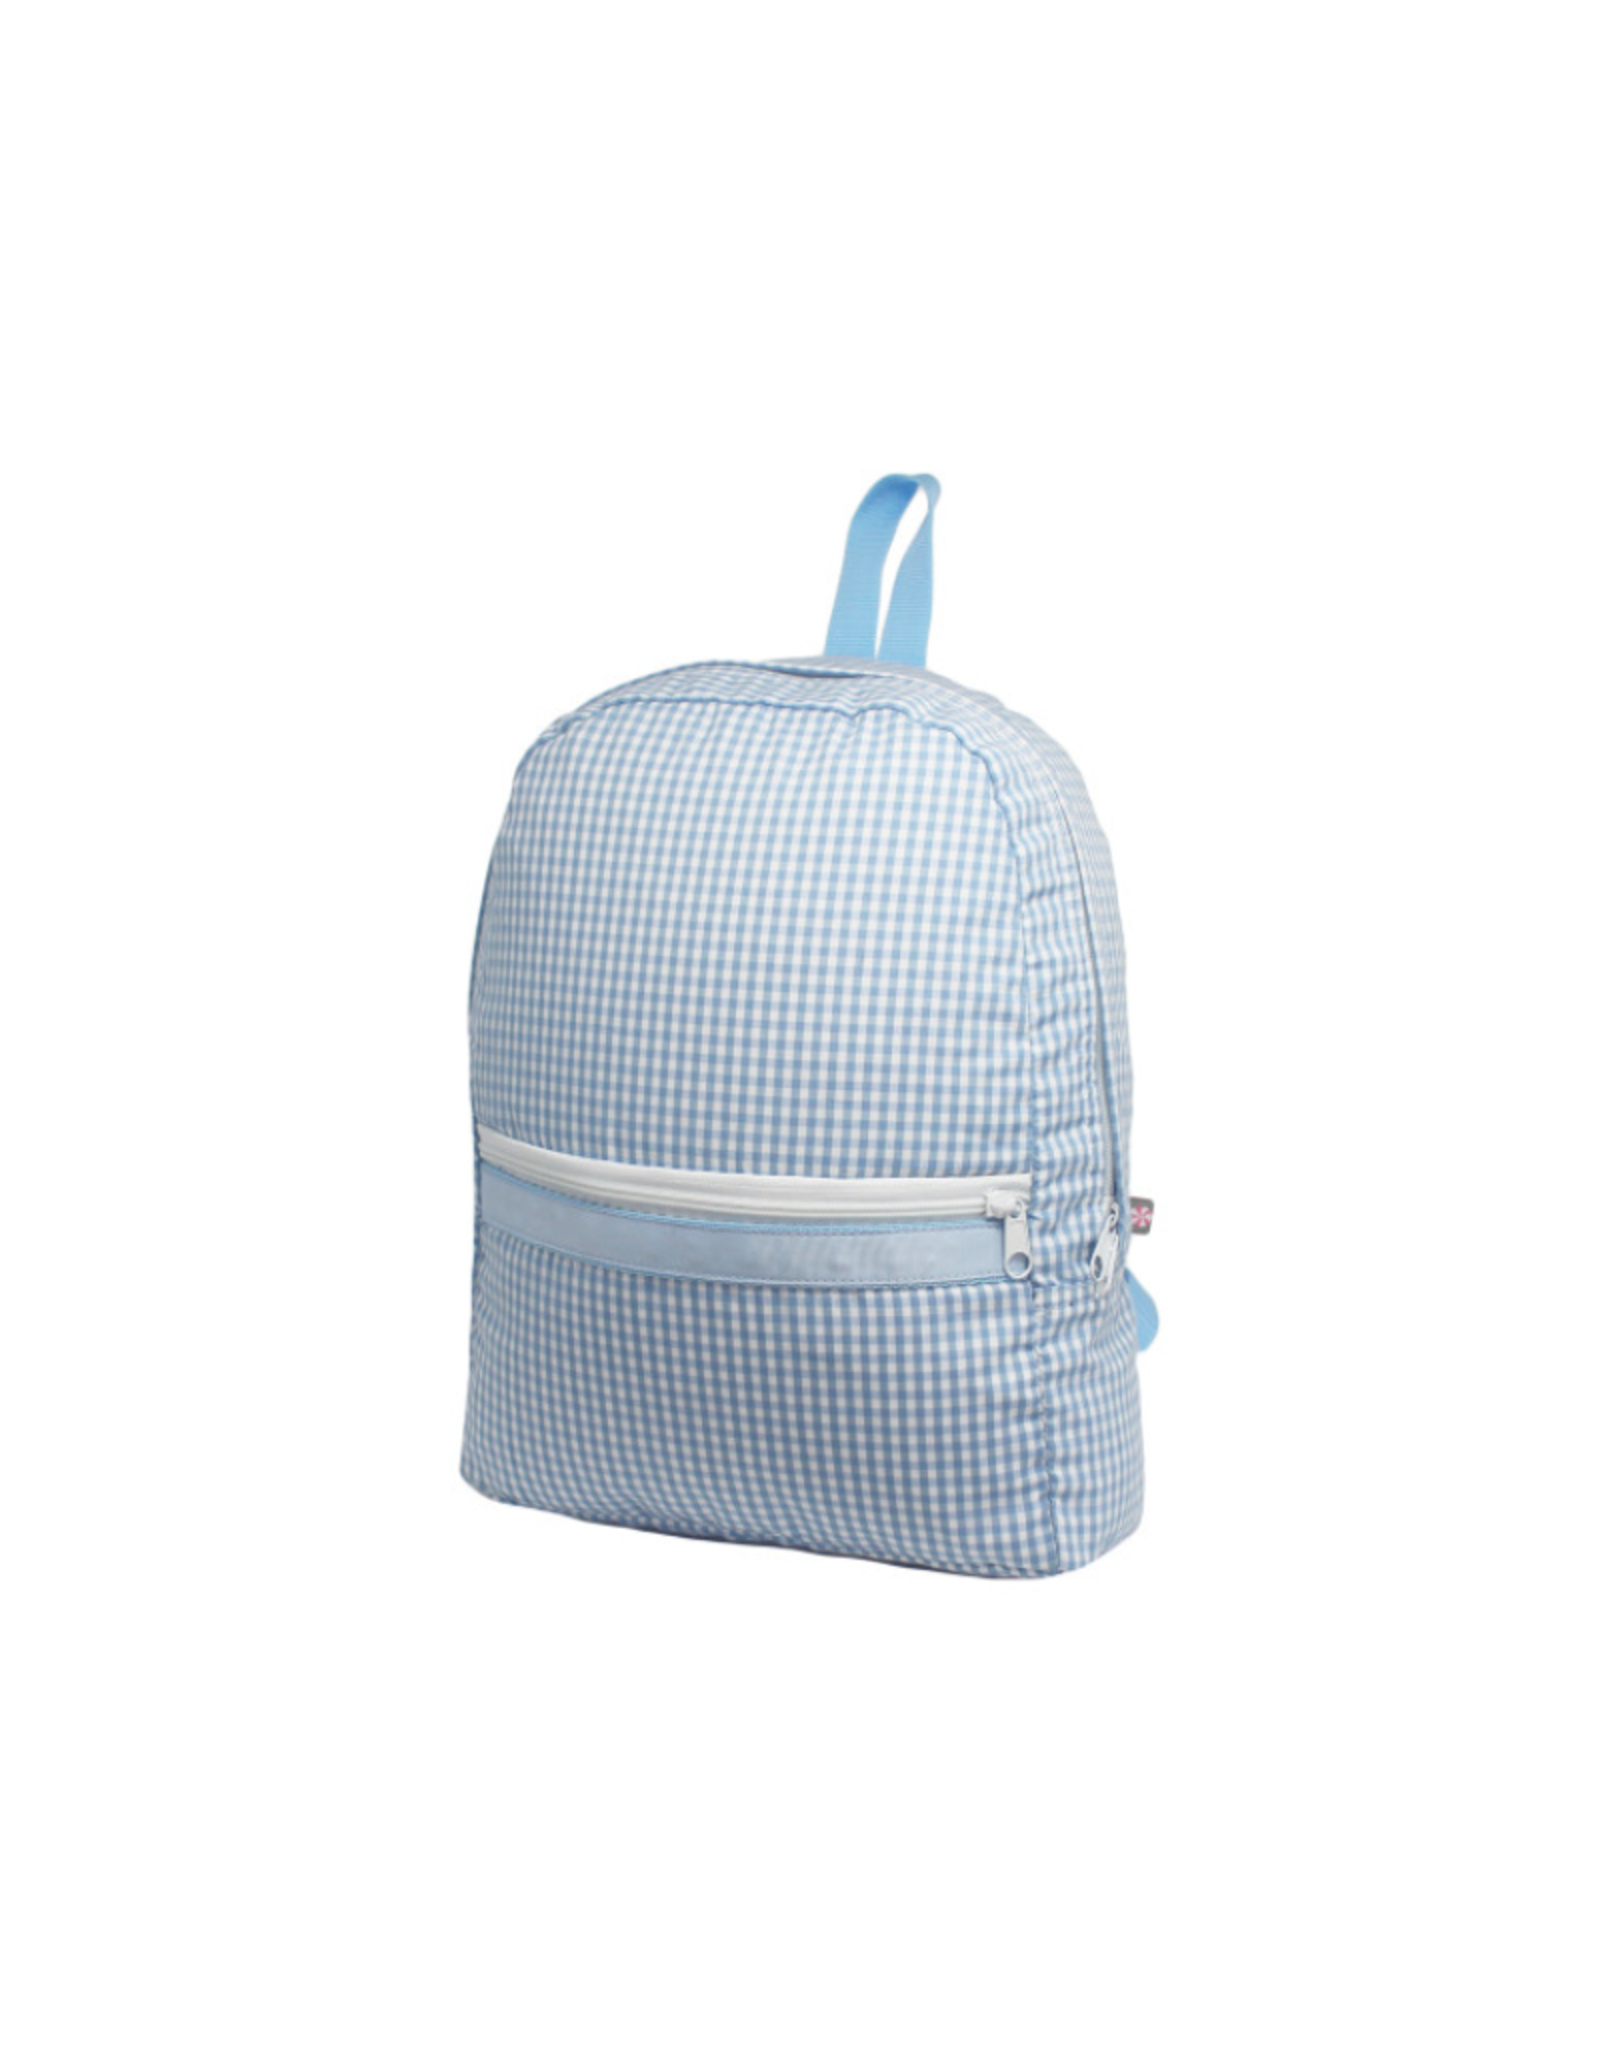 Mint Gingham Medium Backpack